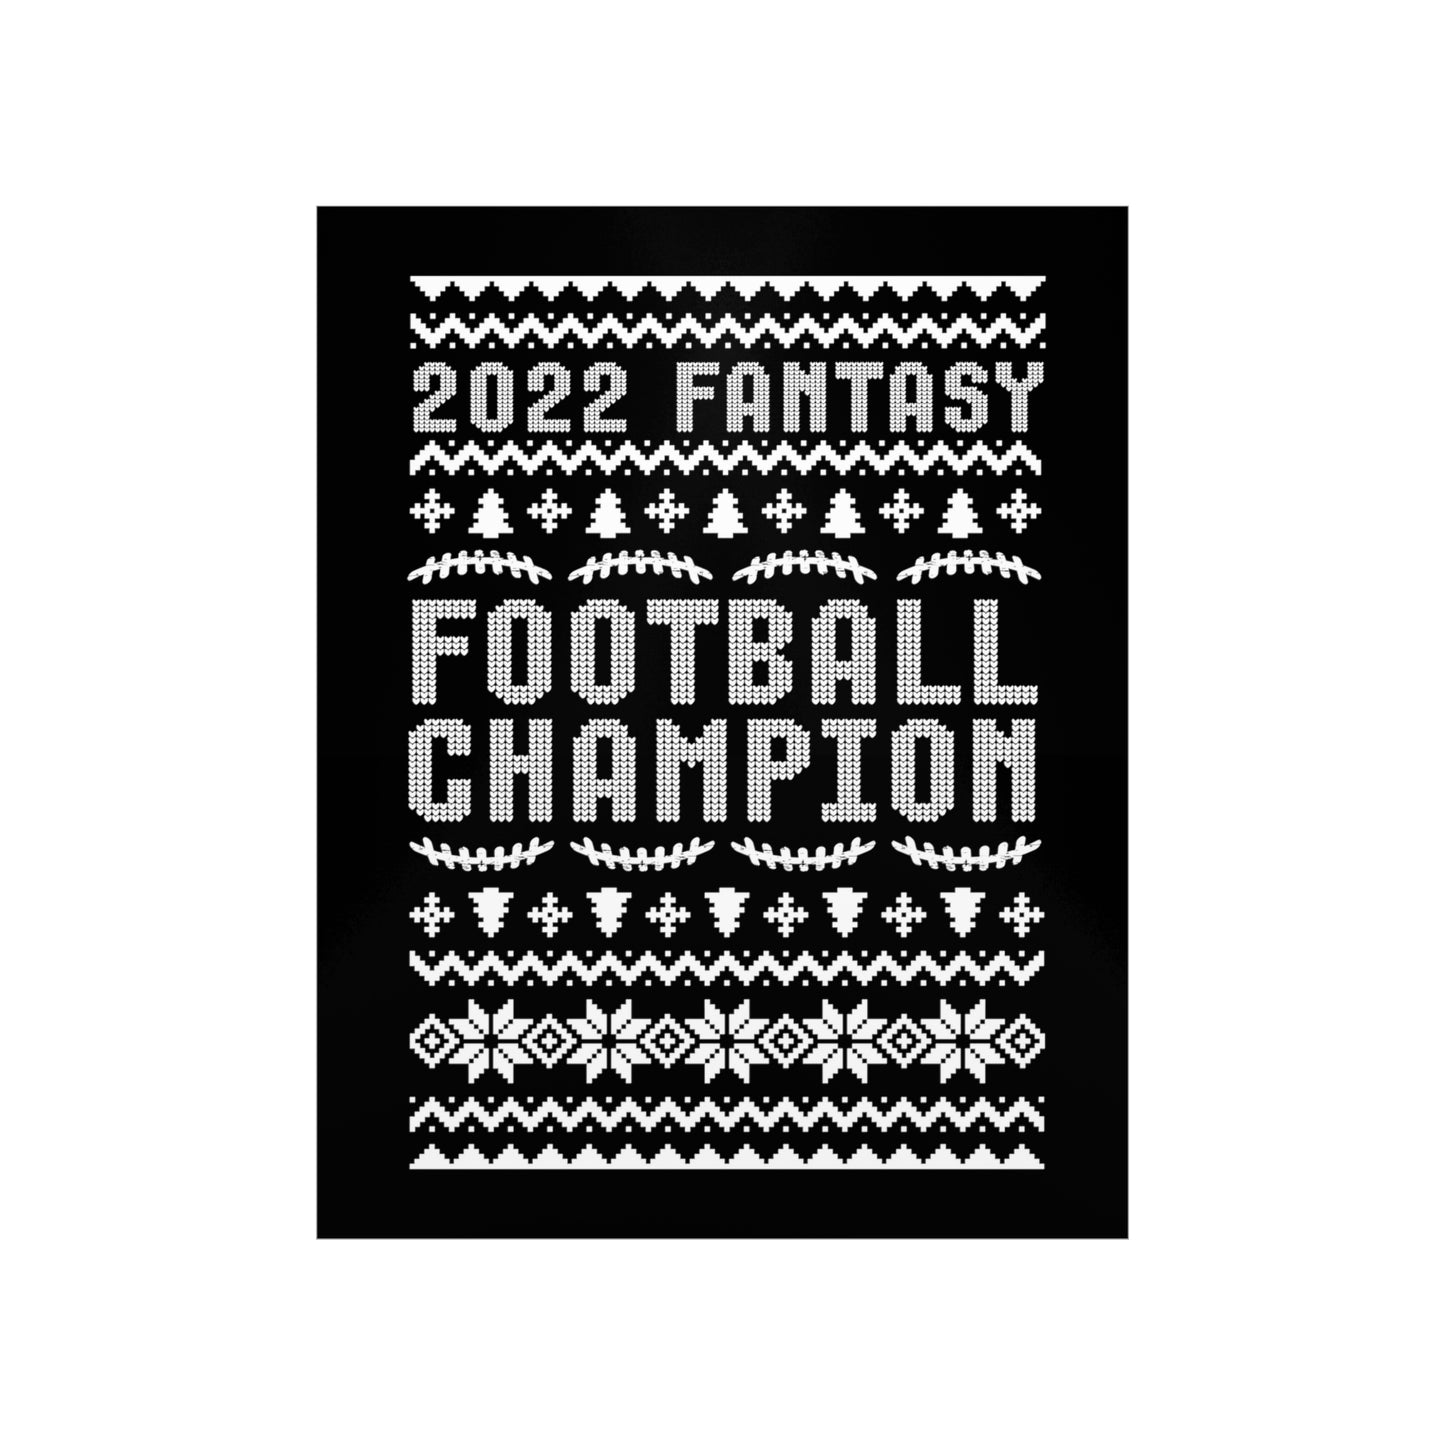 2022 Fantasy Football Champion Ugly Holiday Christmas Champ Premium Matte Poster